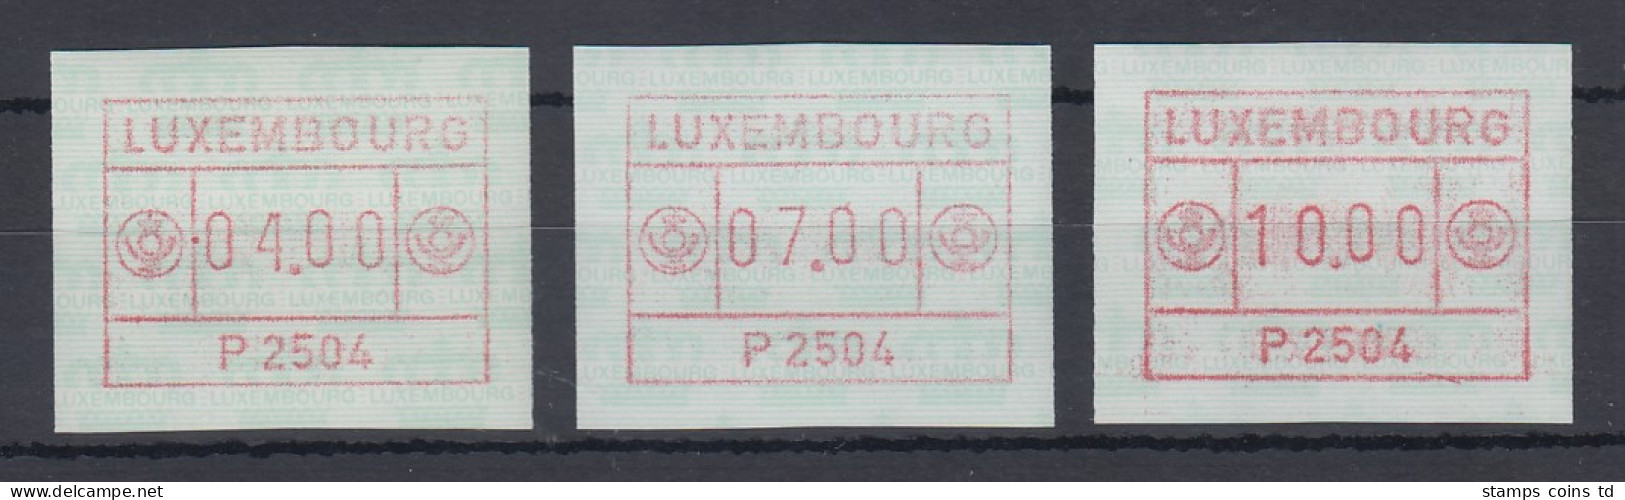 Luxemburg ATM P2504 Tastensatz 4-7-10 ** - Vignette